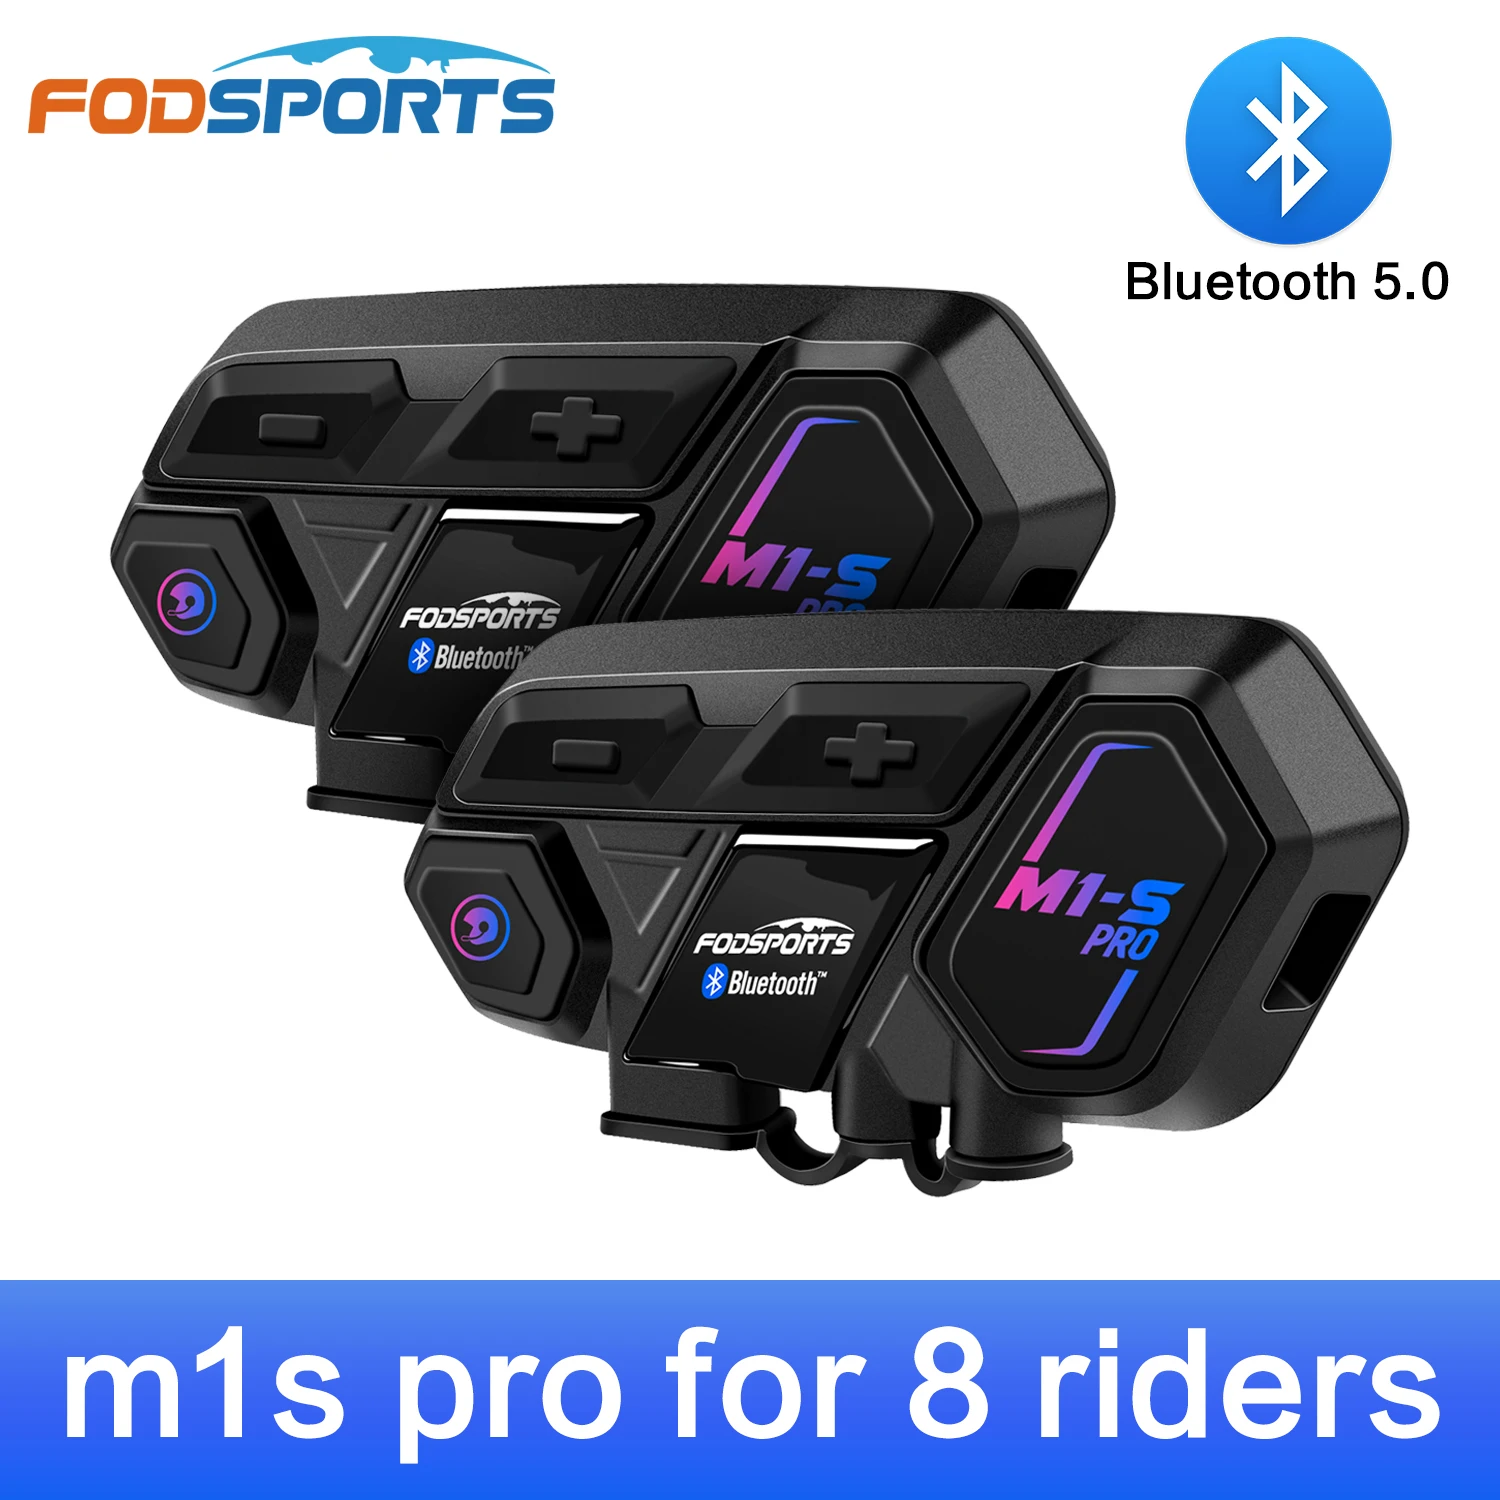 2pcs Fodsports M1-S Pro Motorcycle Helmet Intercom 8 Rider Wireless  Bluetooth Headset Intercomunicador Moto Interphone BT5.0 - AliExpress